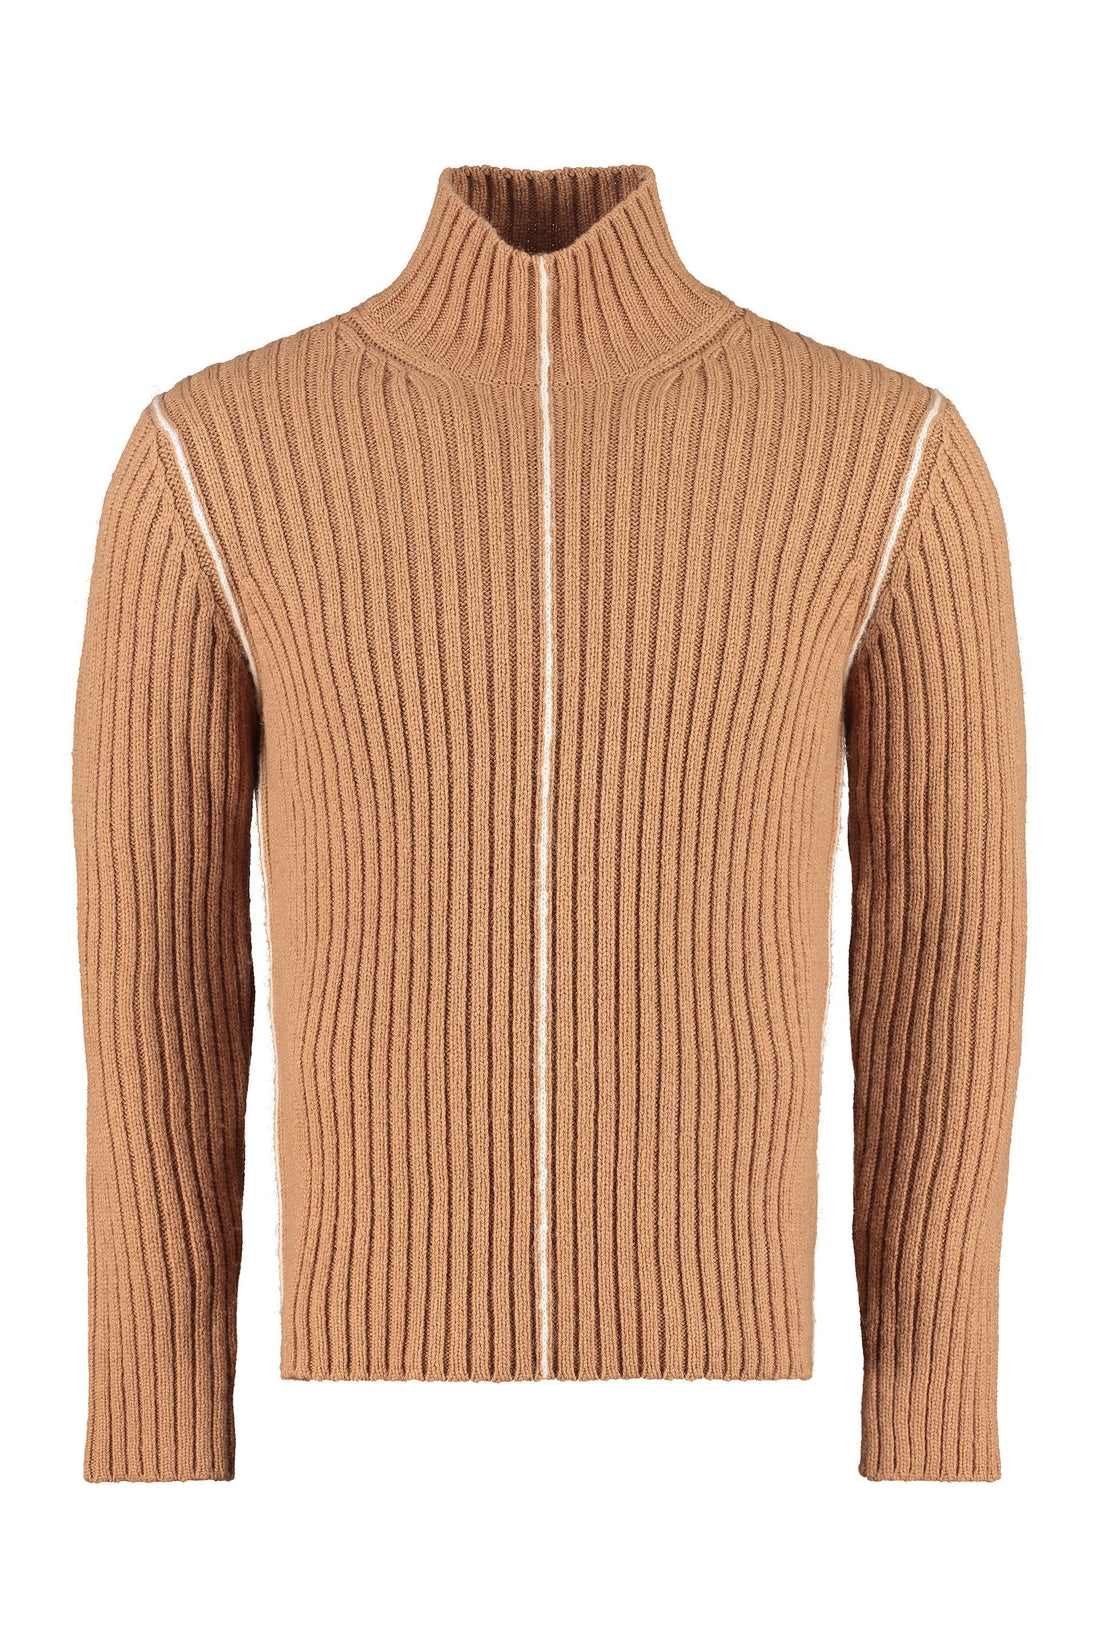 Salvatore Ferragamo-OUTLET-SALE-Ribbed turtleneck sweater-ARCHIVIST